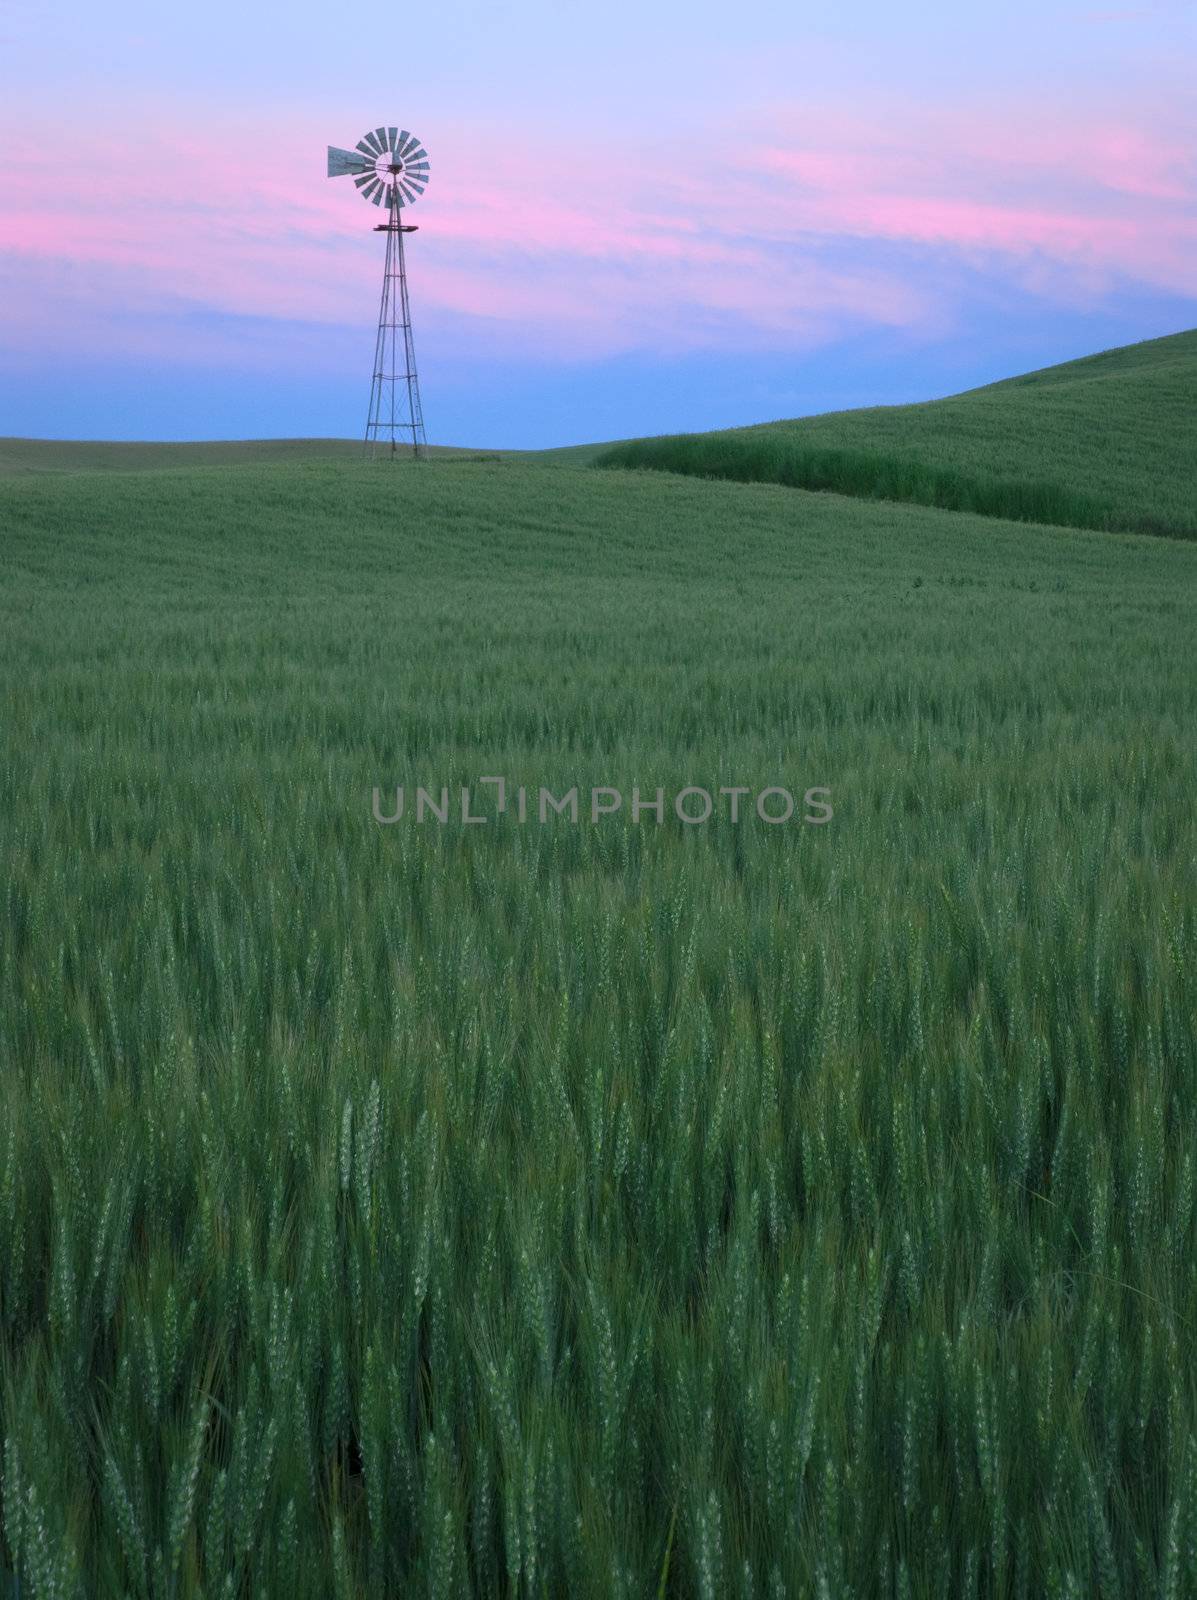 Windmill, wheat and clouds at twilight, Whitman County, Washington, USA by CharlesBolin